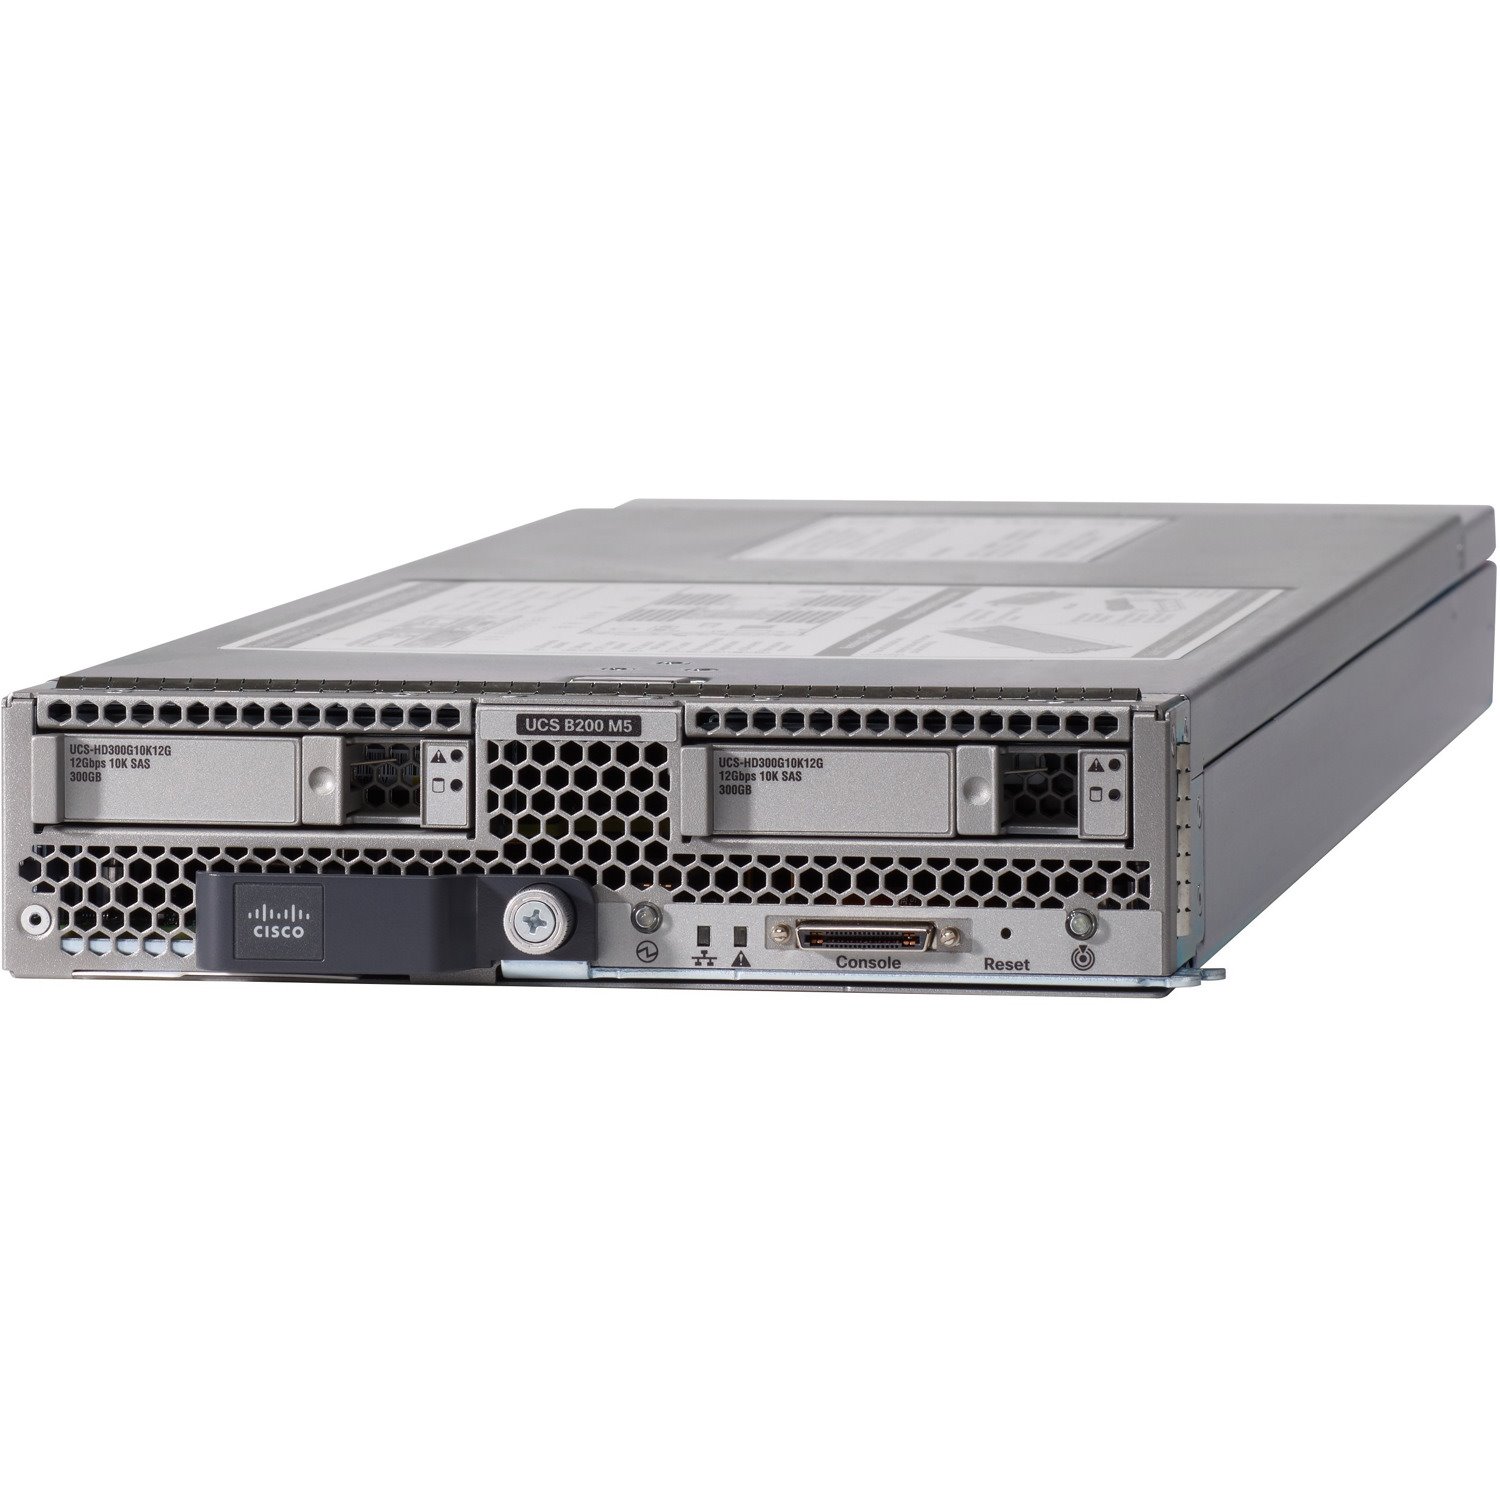 Cisco B200 M5 Blade Server - 2 x Intel Xeon Gold 6130 2.10 GHz - 192 GB RAM - Serial ATA, 12Gb/s SAS Controller - Refurbished